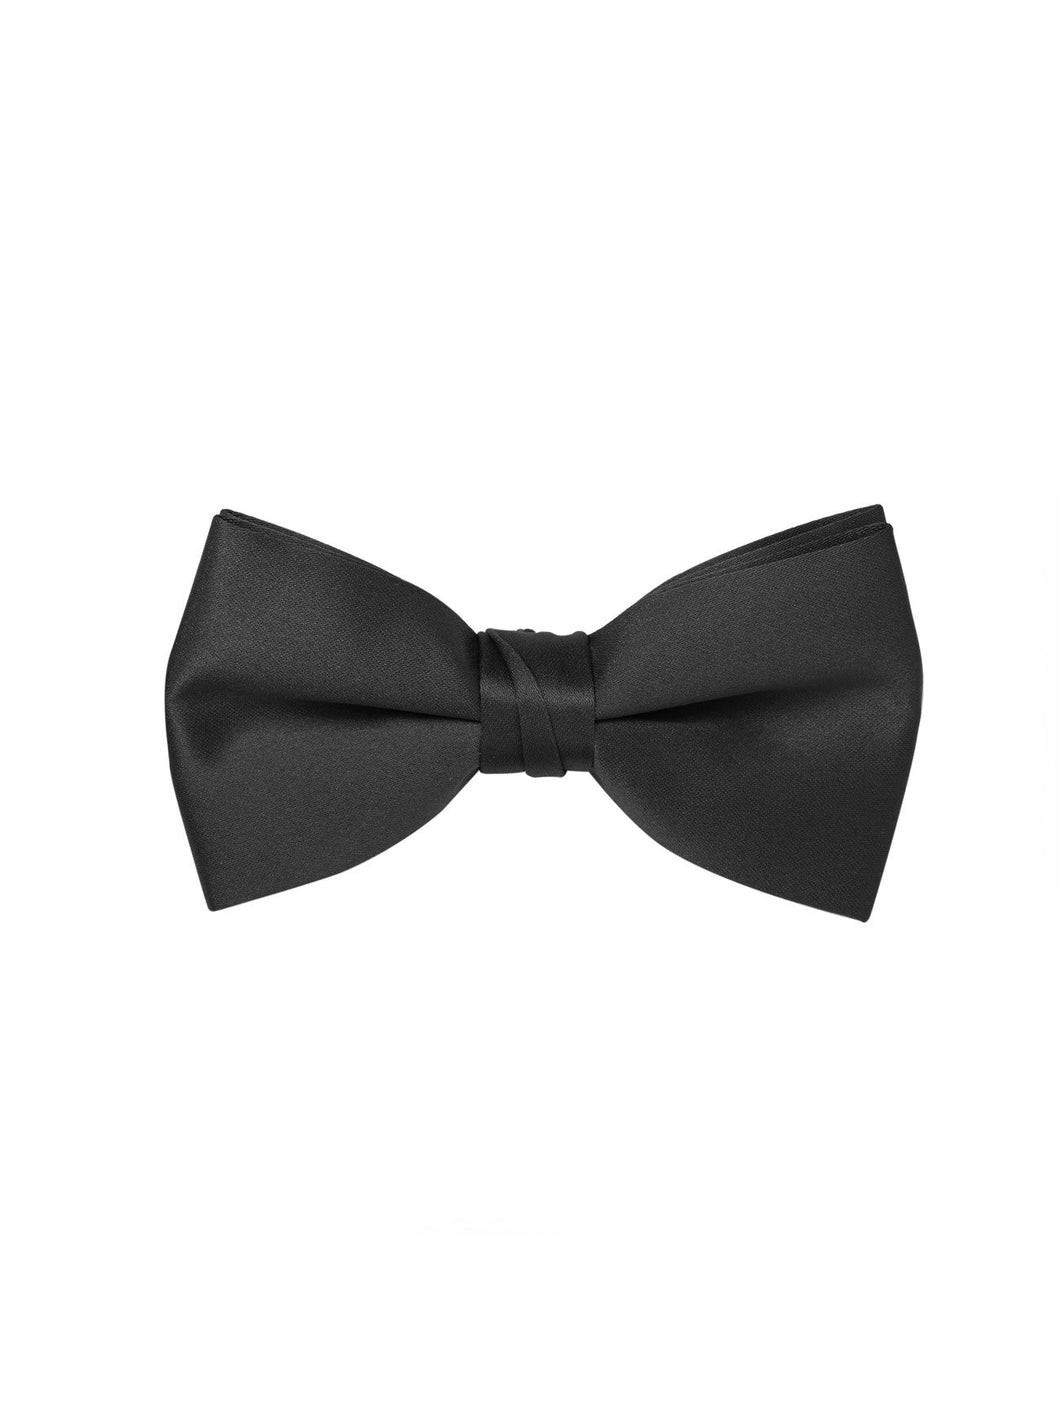 Men's Classic Pre-Tied Formal Tuxedo Bow Tie - Black